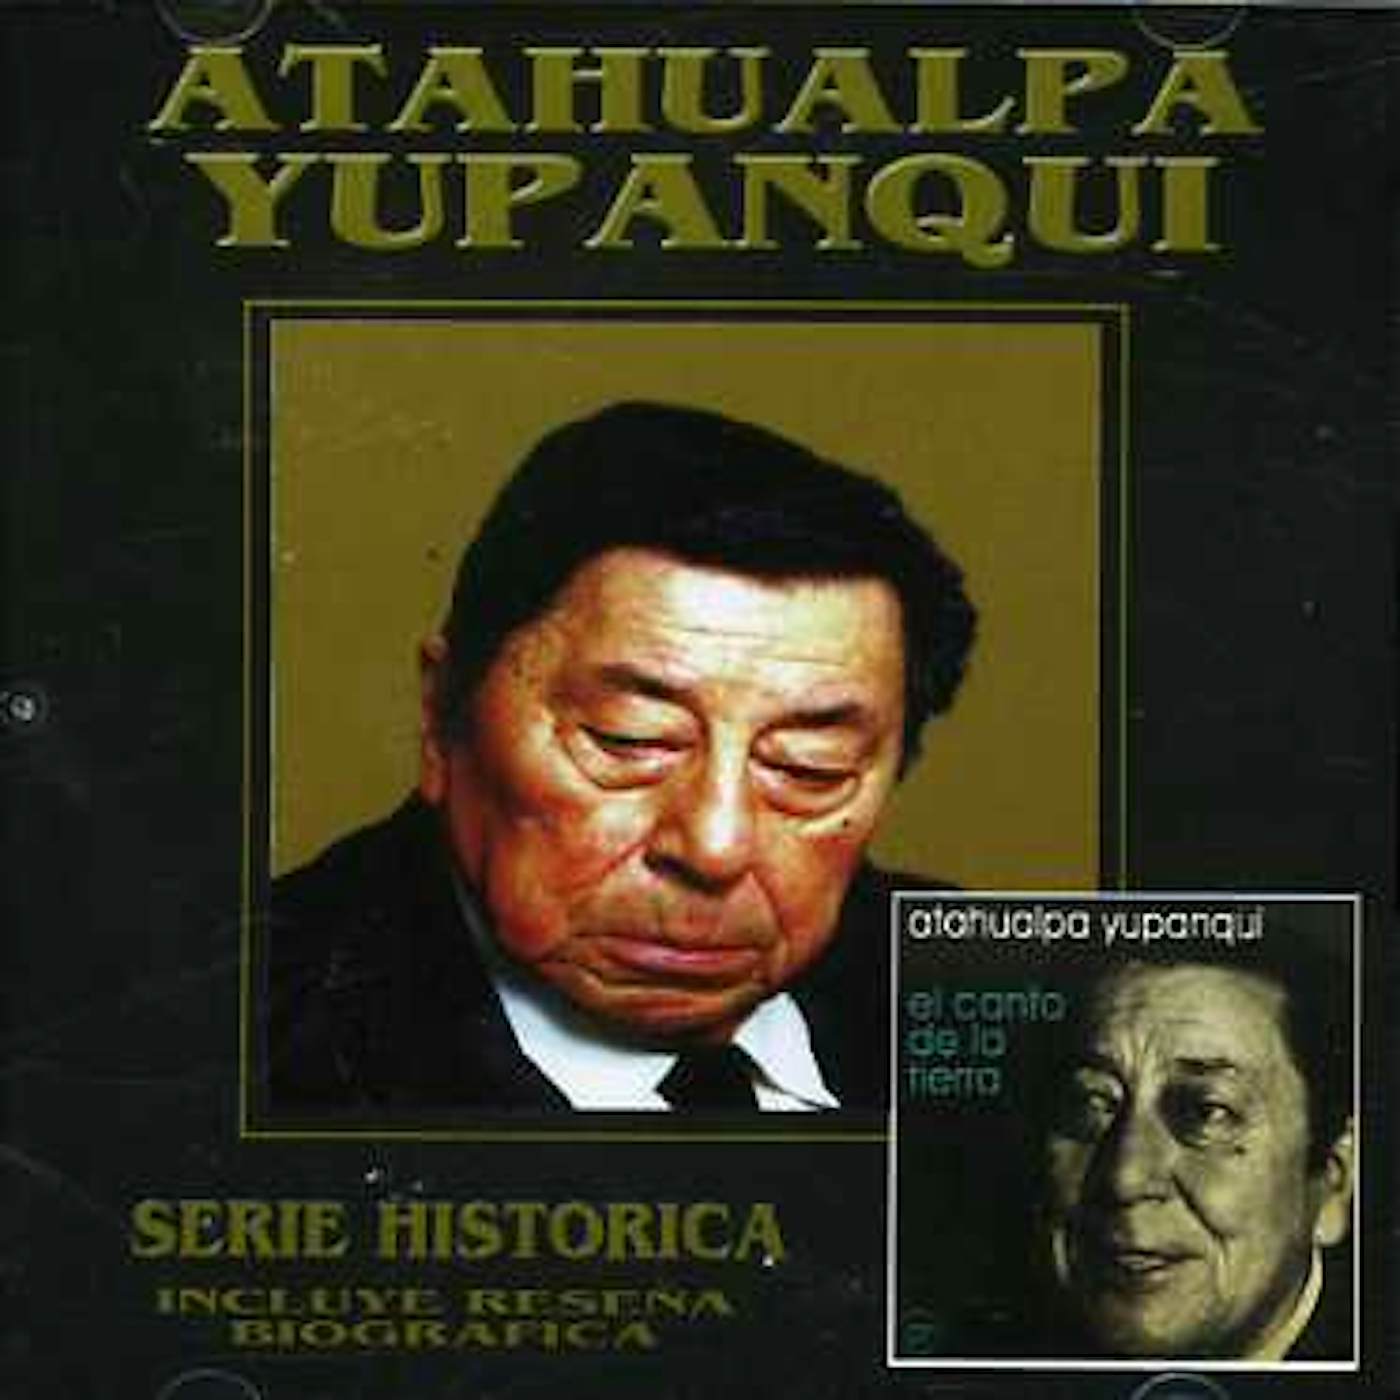 Atahualpa Yupanqui SERIE HISTORICA CD